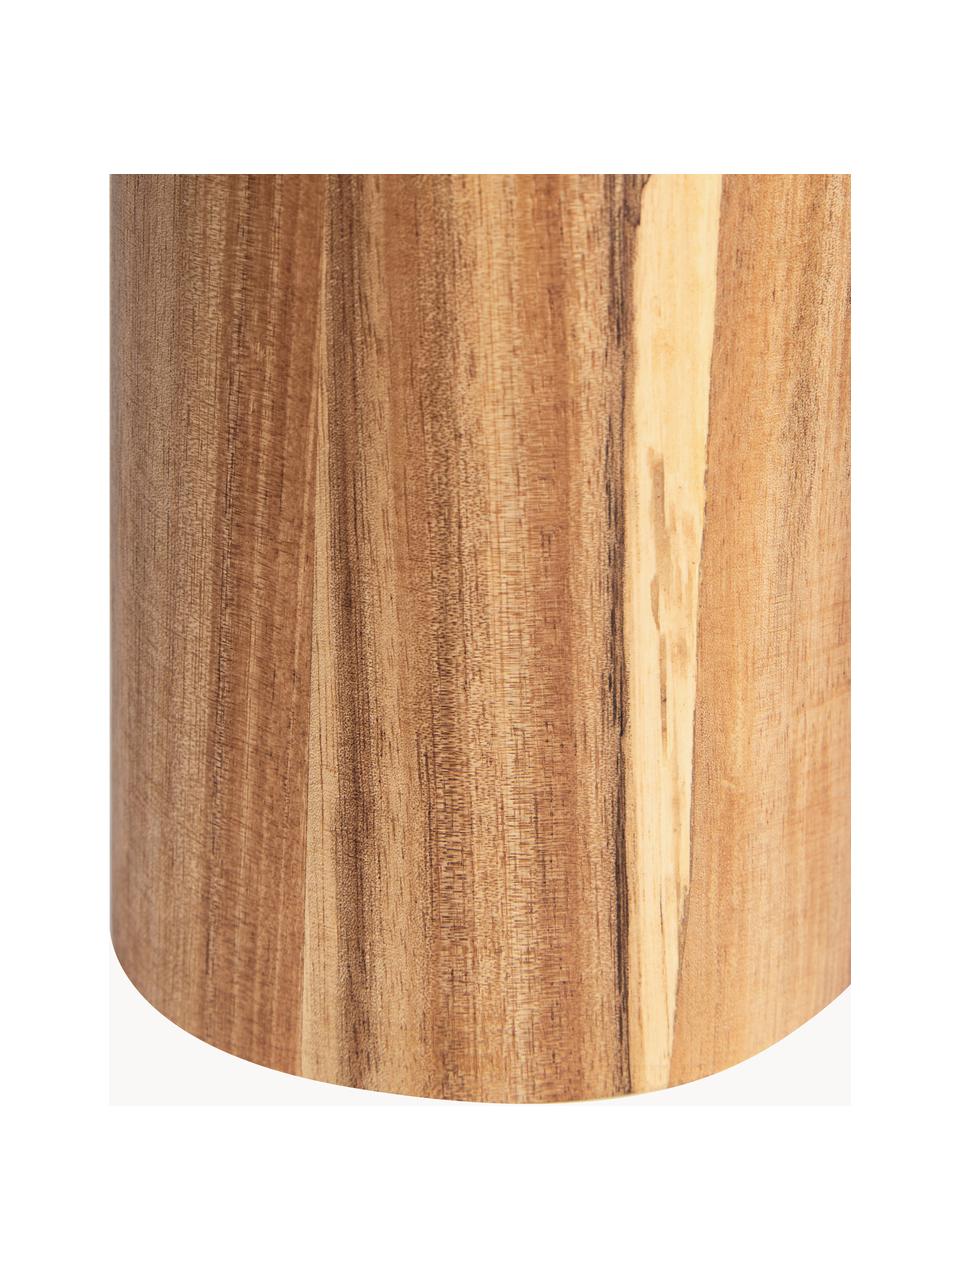 Toilettenbürste Wood aus Akazienholz, Behälter: Akazienholz, Griff: Kunststoff in Stahl-Optik, Akazienholz, Ø 10 x H 36 cm